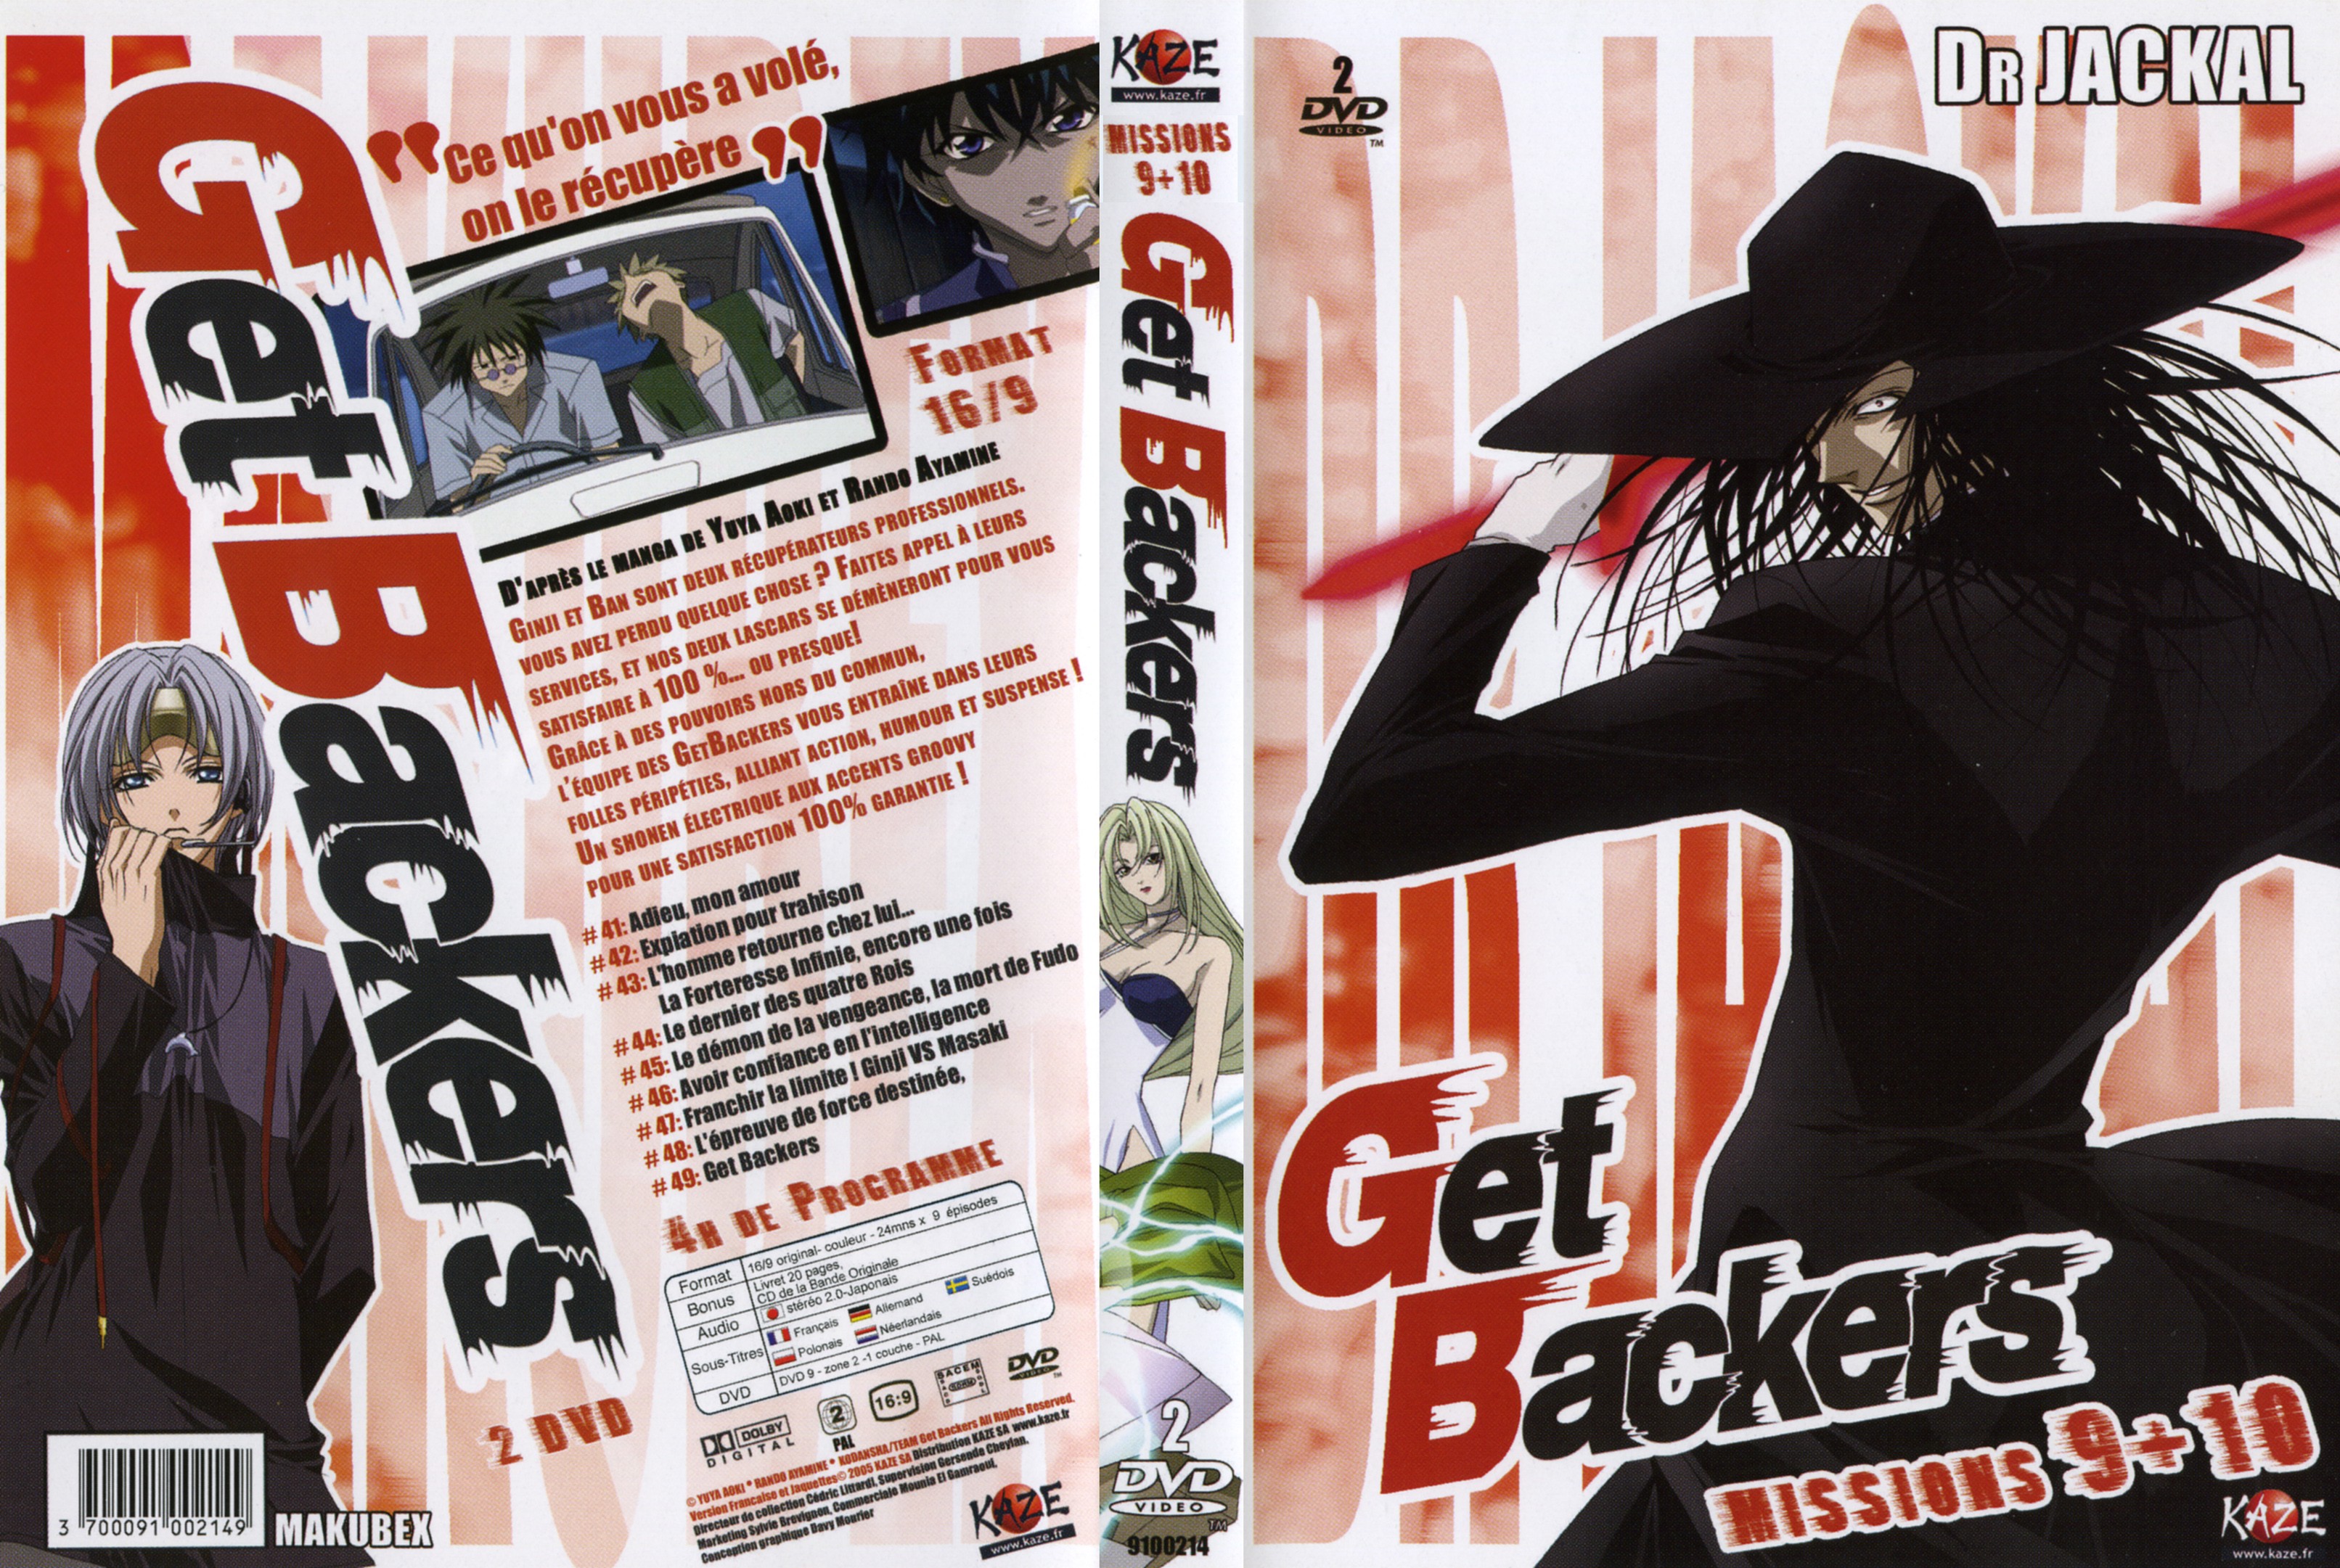 Jaquette DVD Get backers vol 09-10